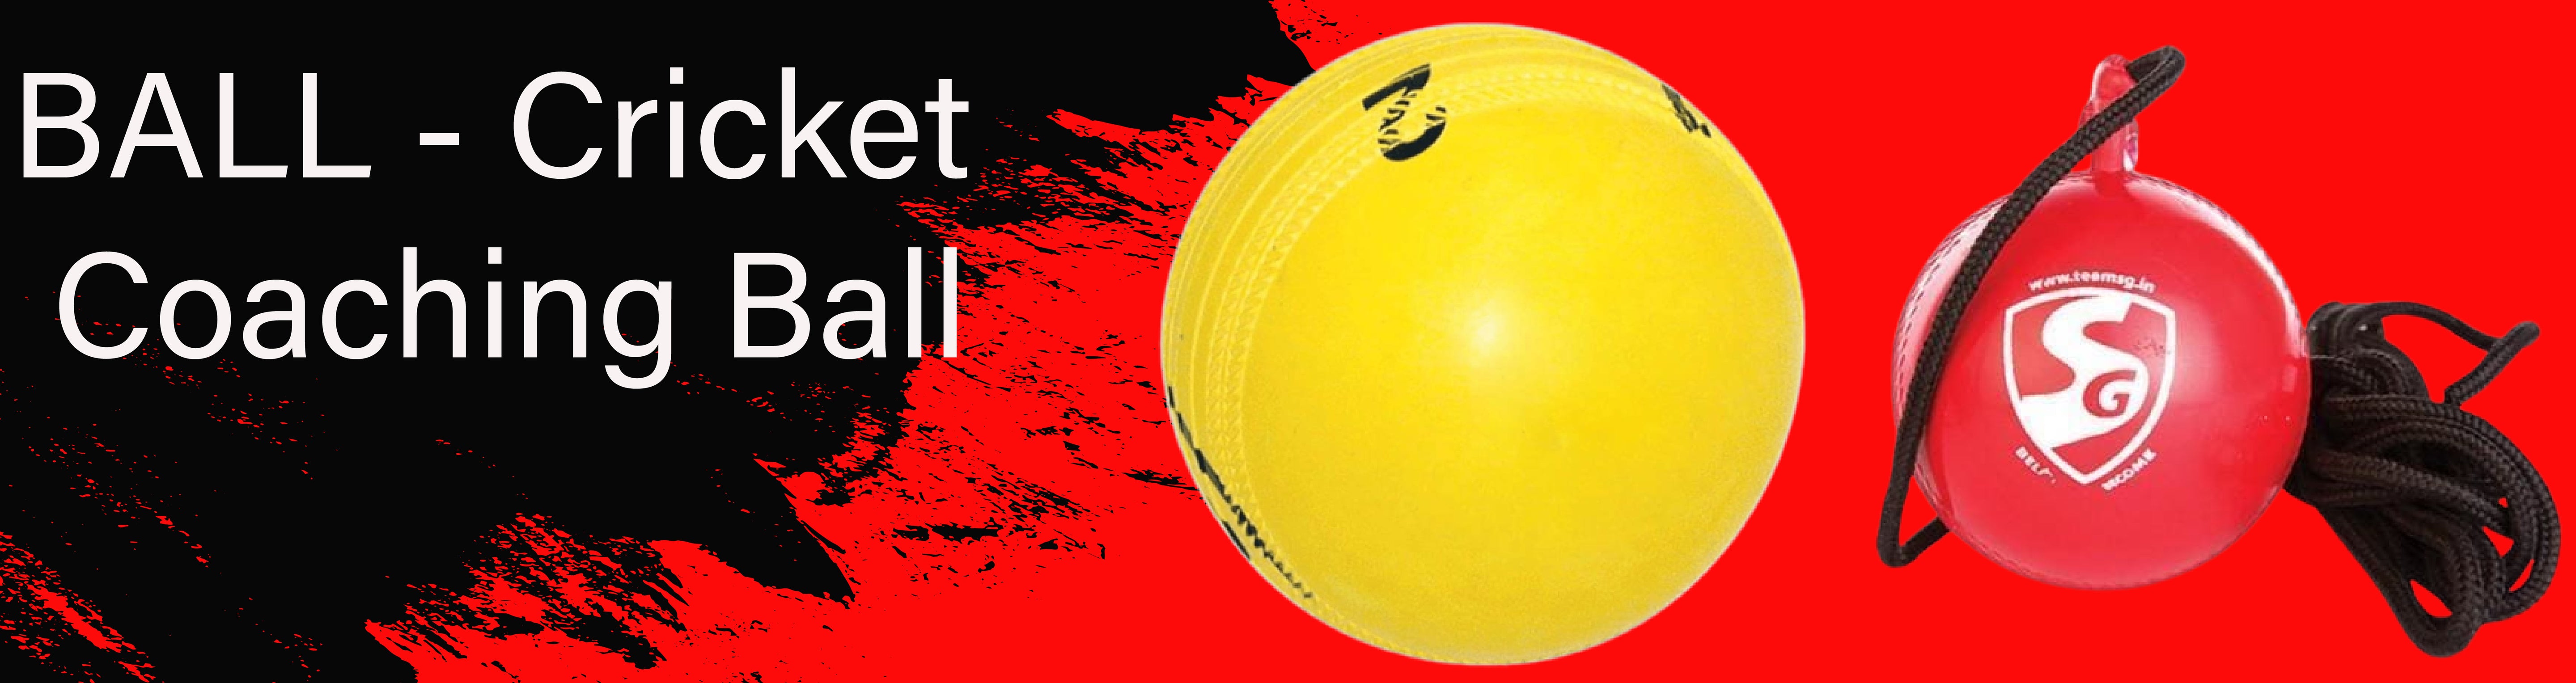 Collection image BALL - Cricket Coaching Ball